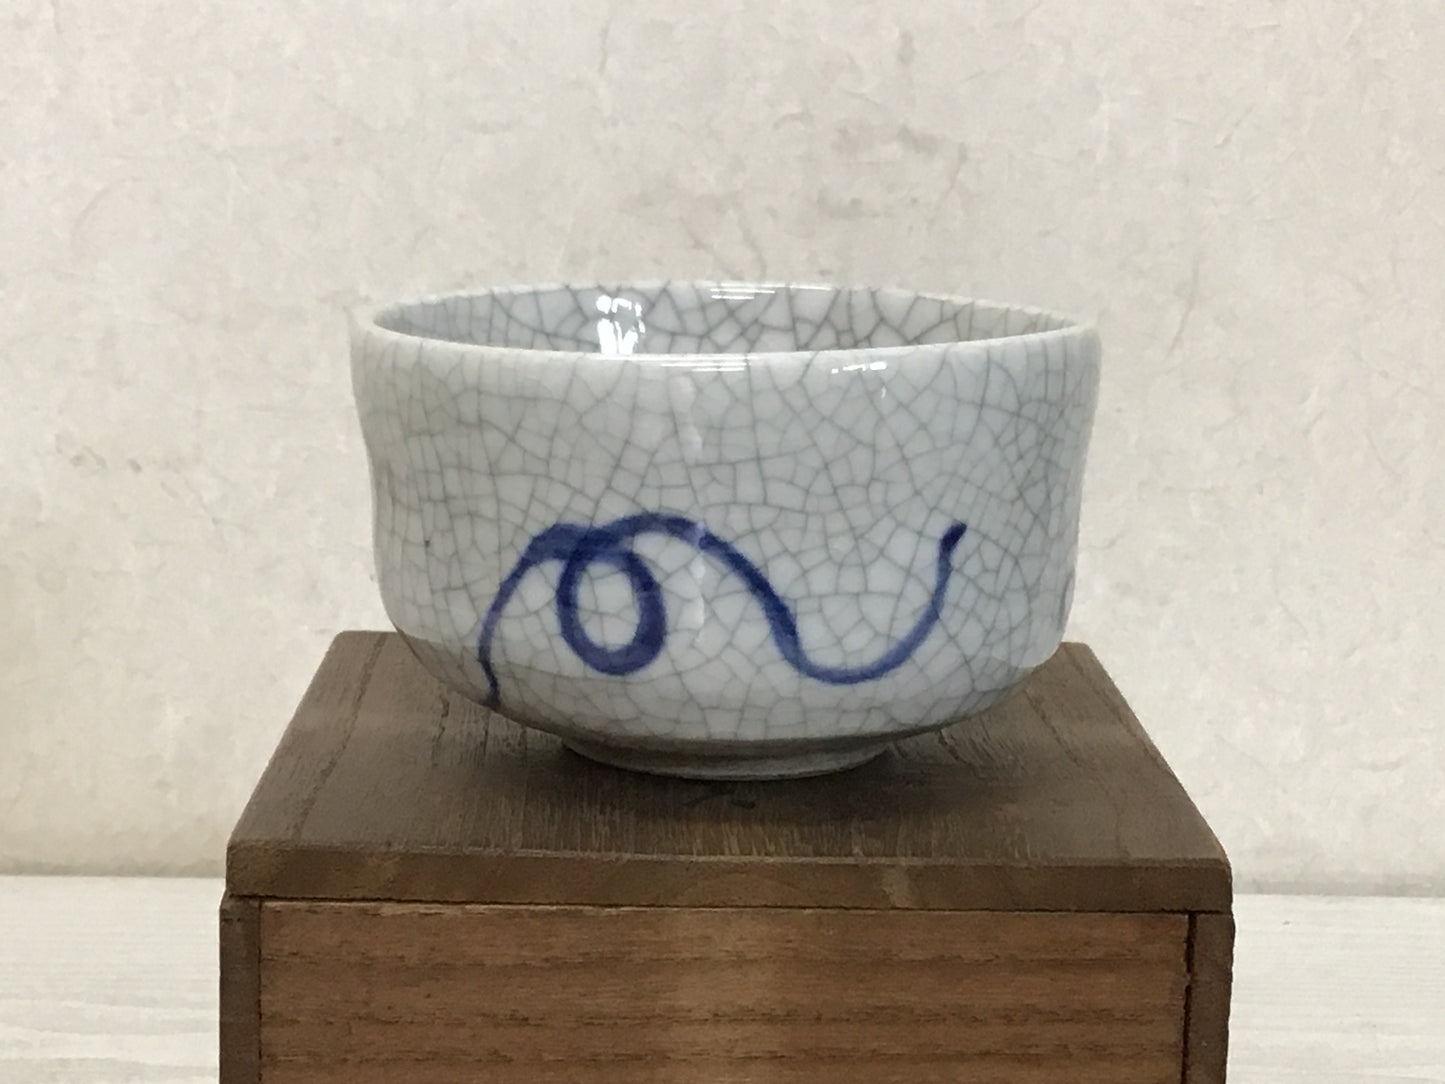 Y1829 CHAWAN Seto-ware box Japanese bowl pottery Japan tea ceremony